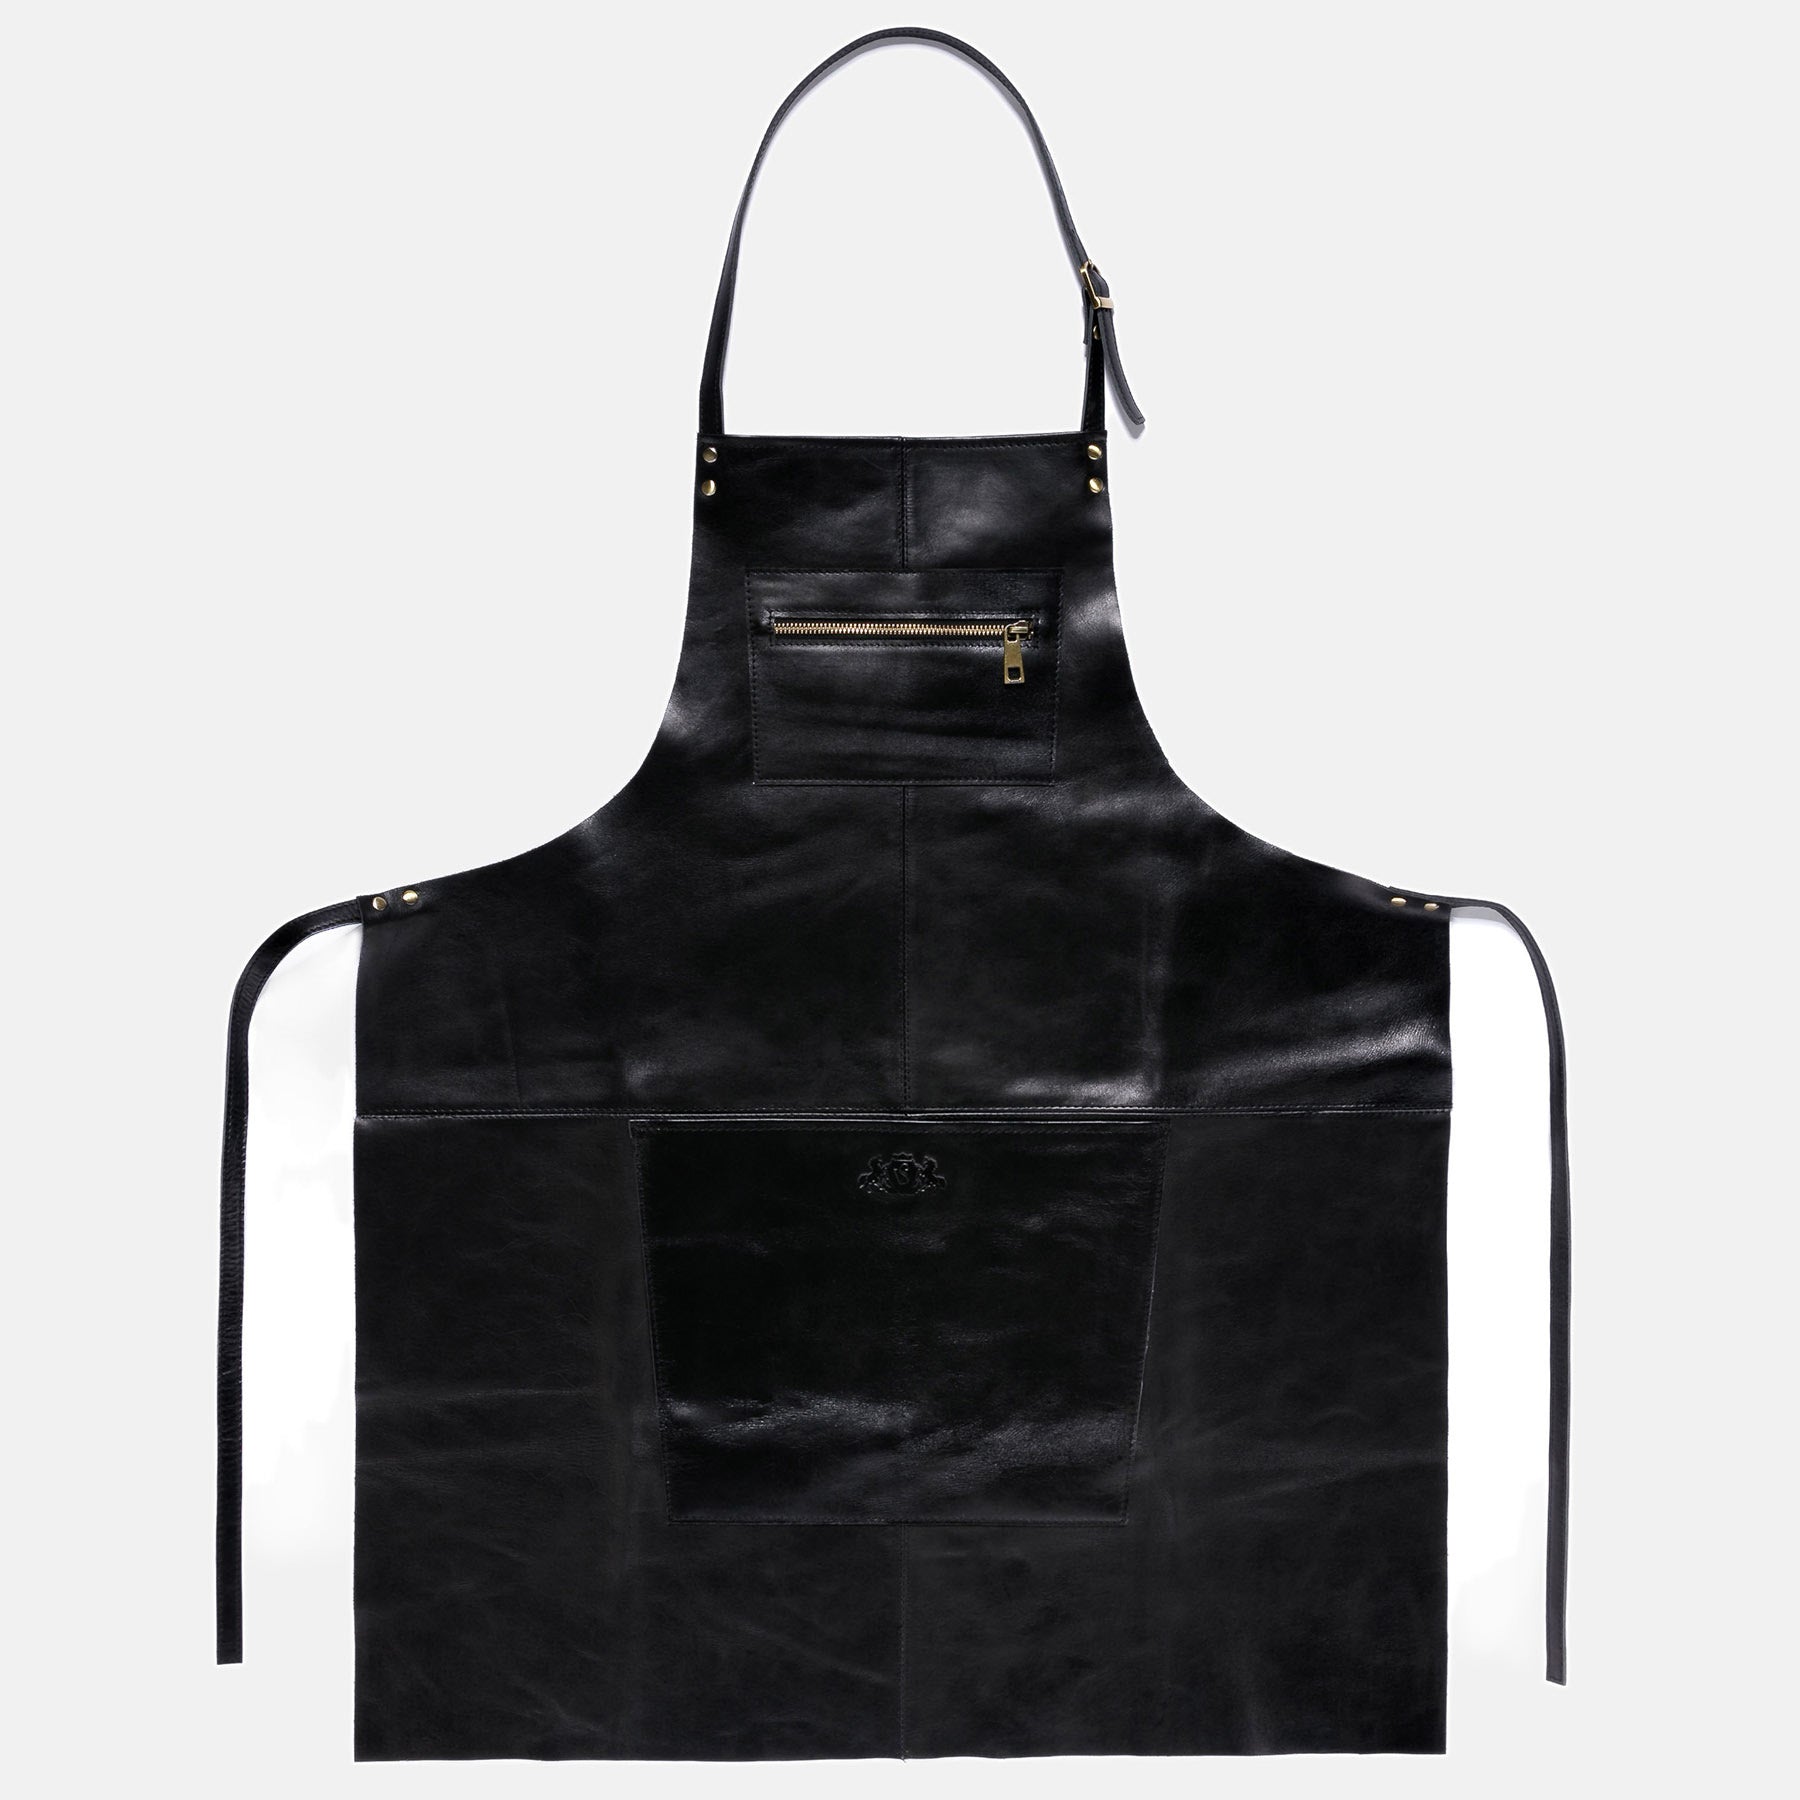 Leather apron HEATHROW smooth leather black